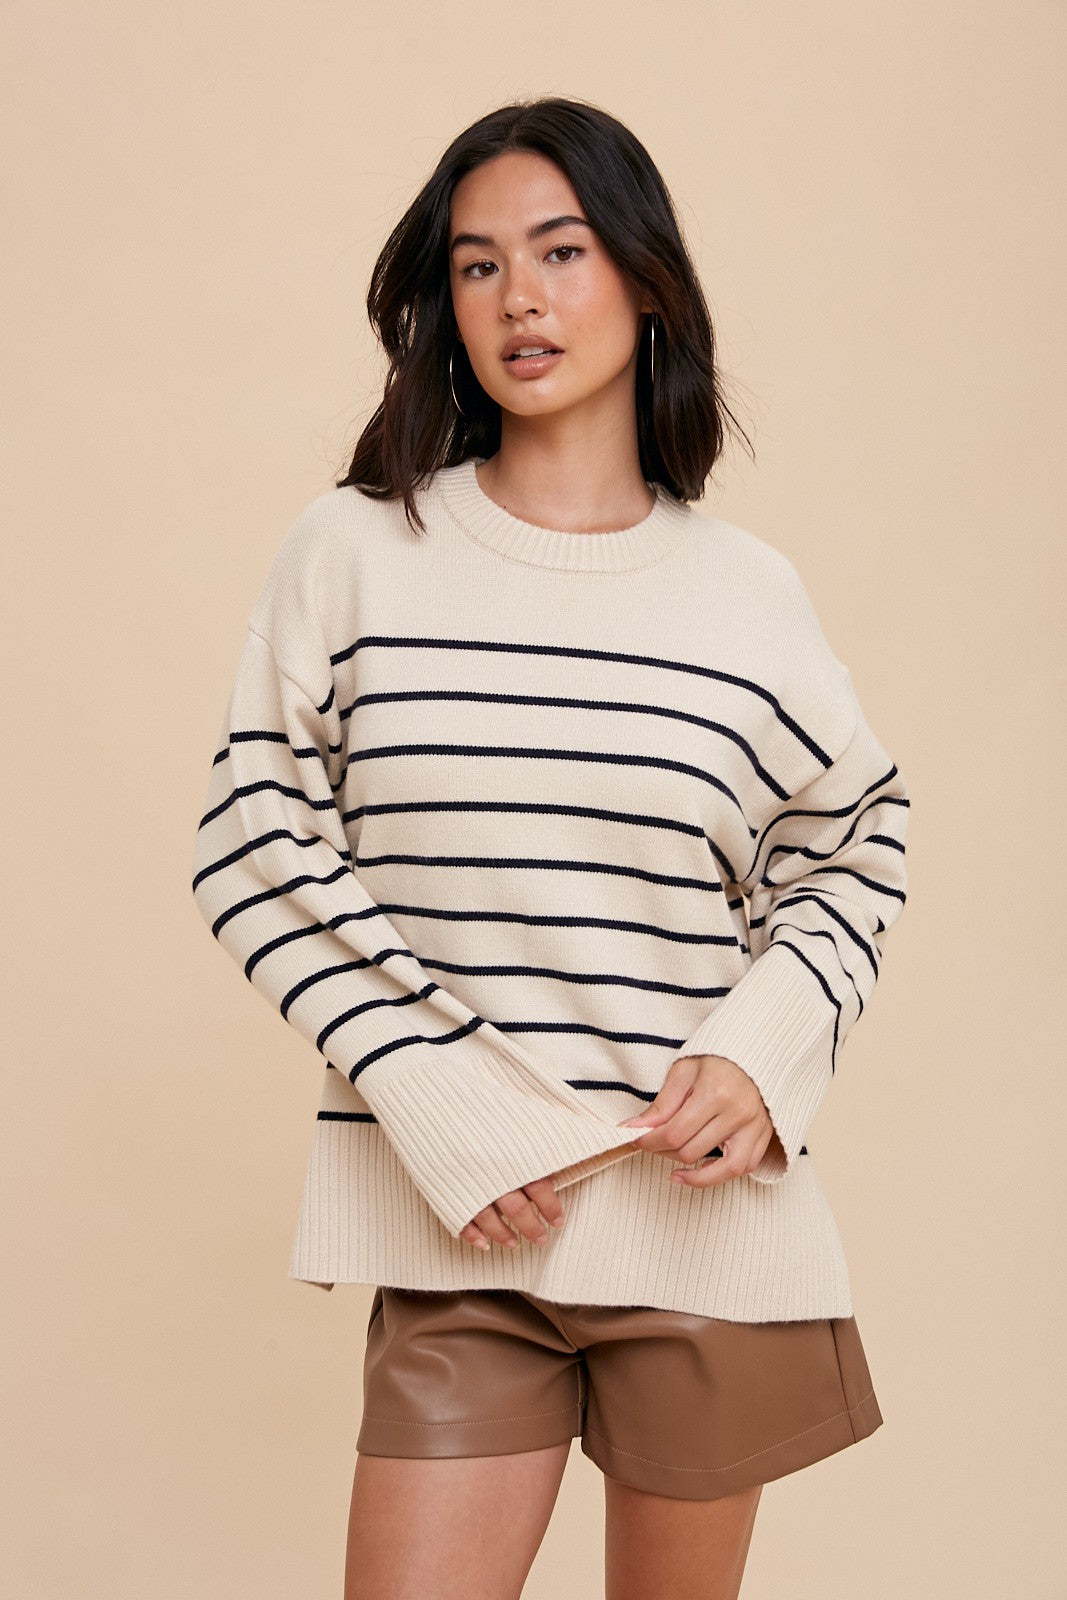 Stripe Knit Crew Sweater